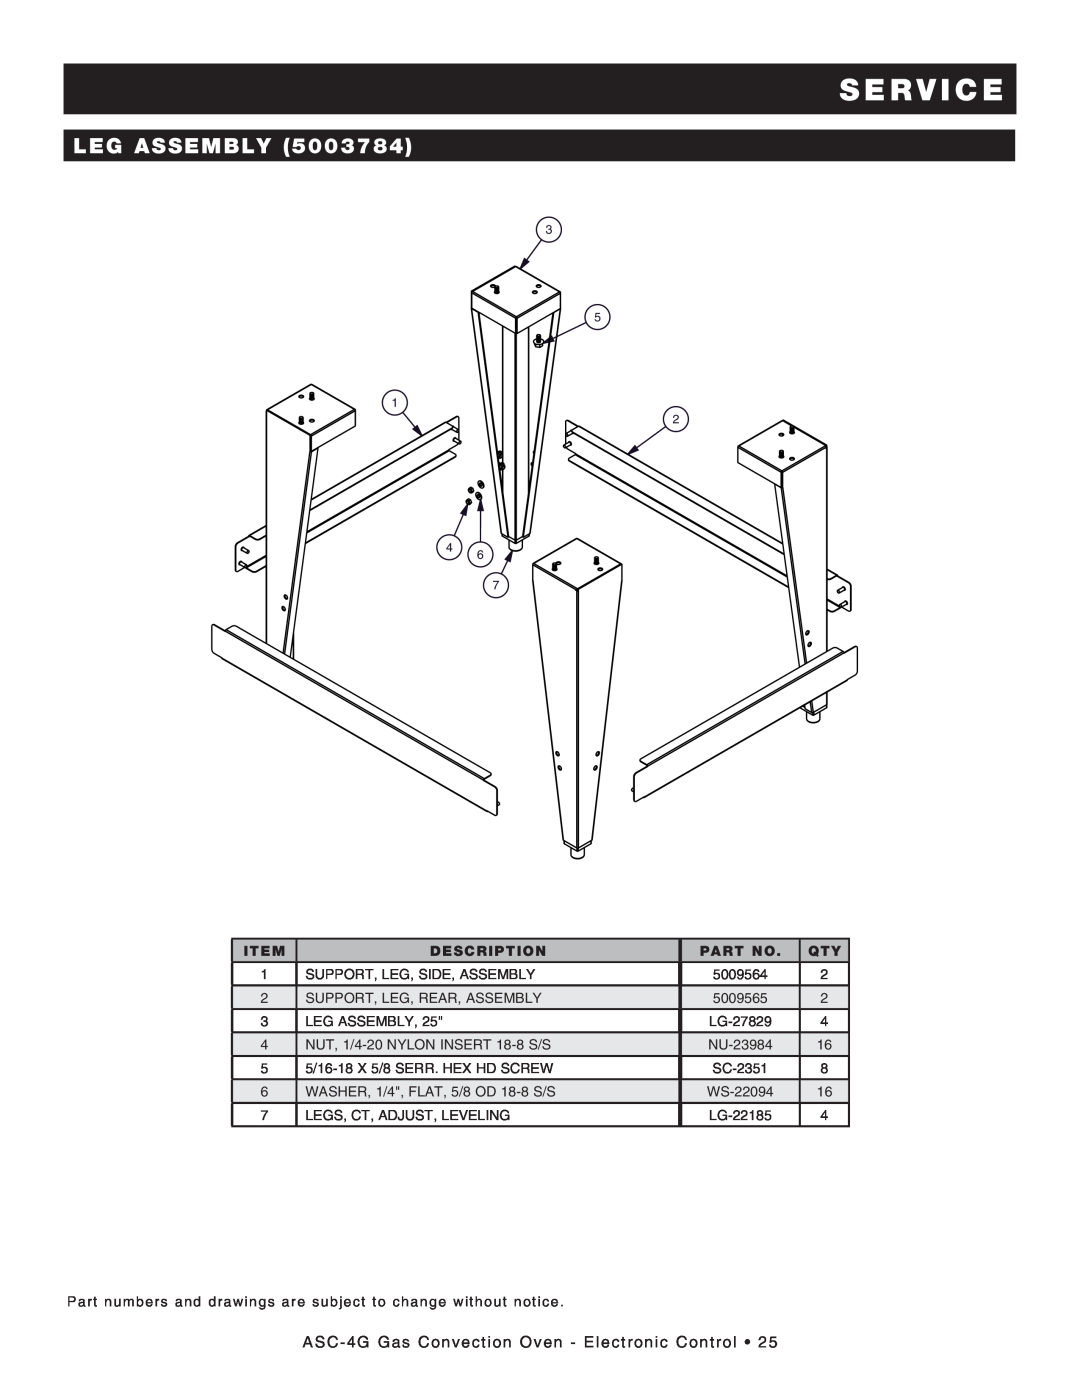 Alto-Shaam manual Leg Assembly, s e rvi c e, ASC-4G Gas Convection Oven - Electronic Control, Description 